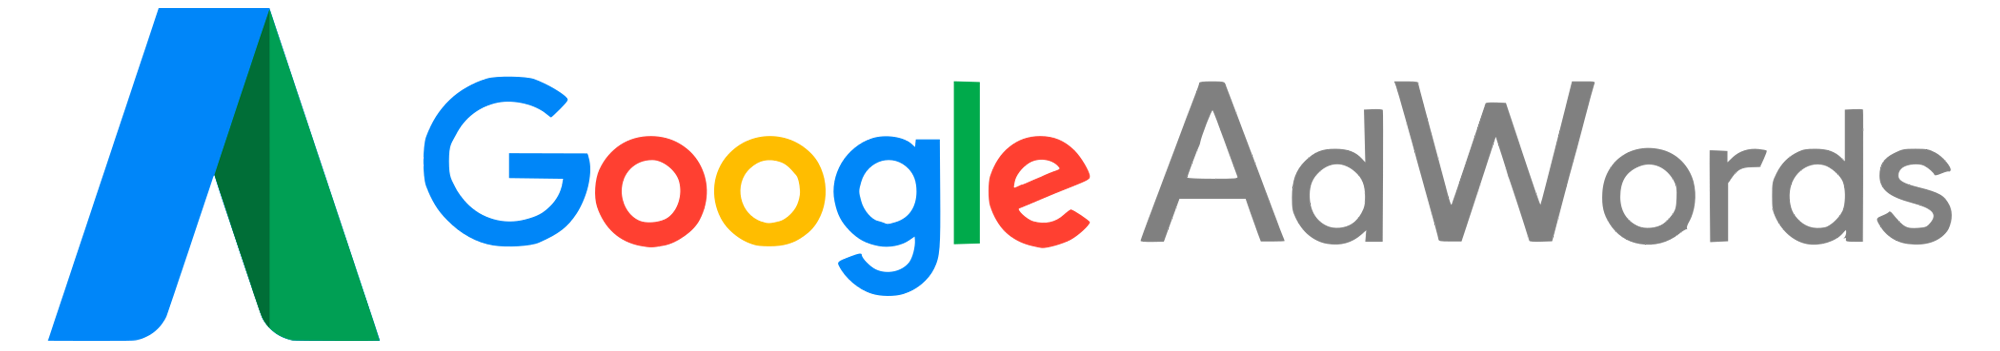 Logotipo plataforma marketing digital Google Adwords.